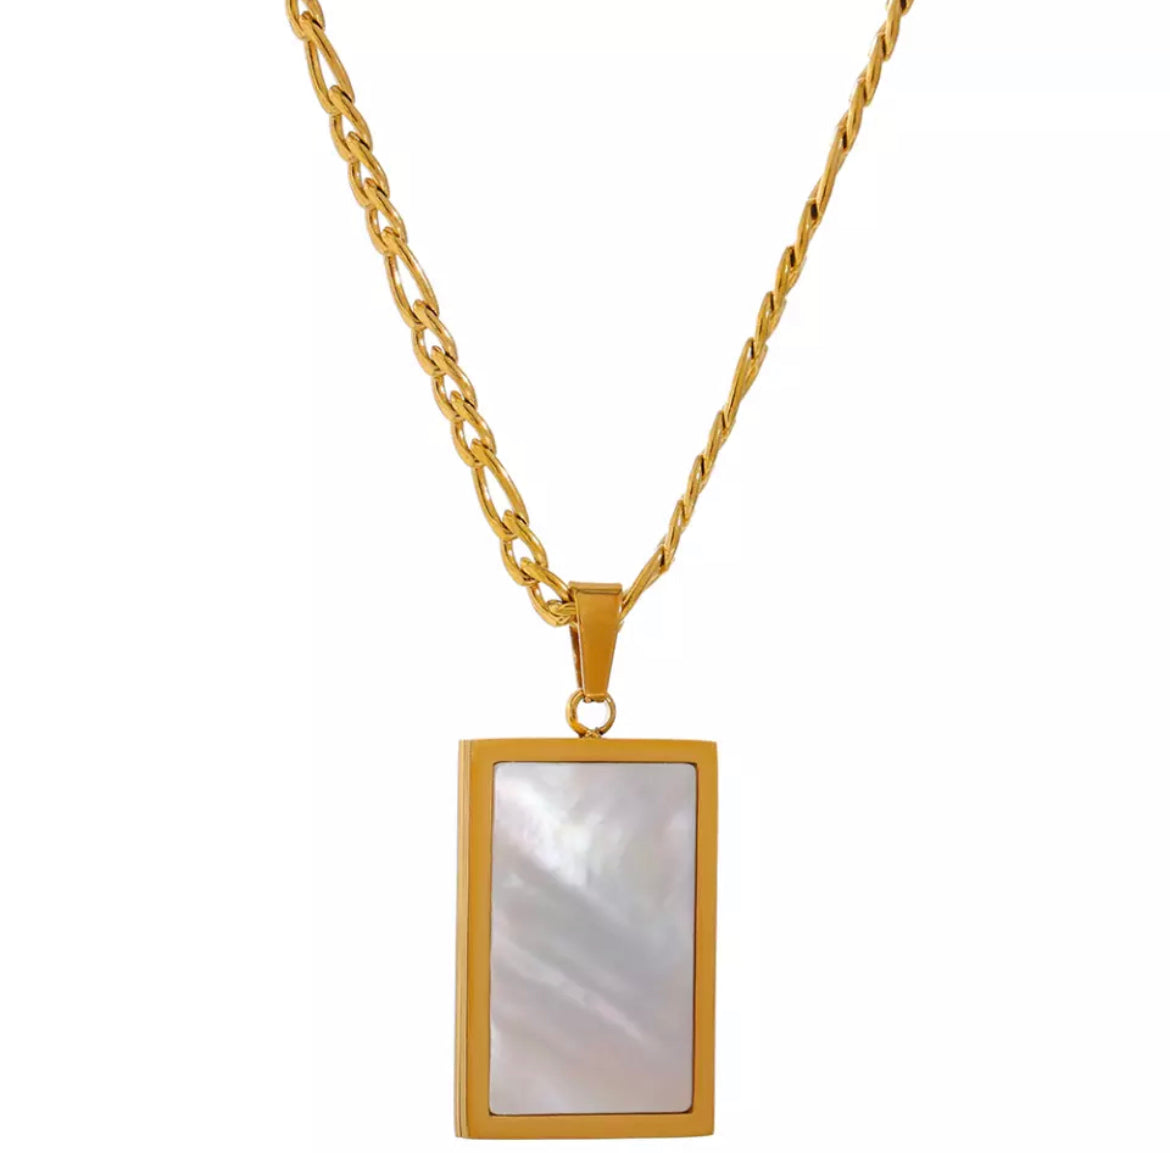 Gold Square Pendant Necklace